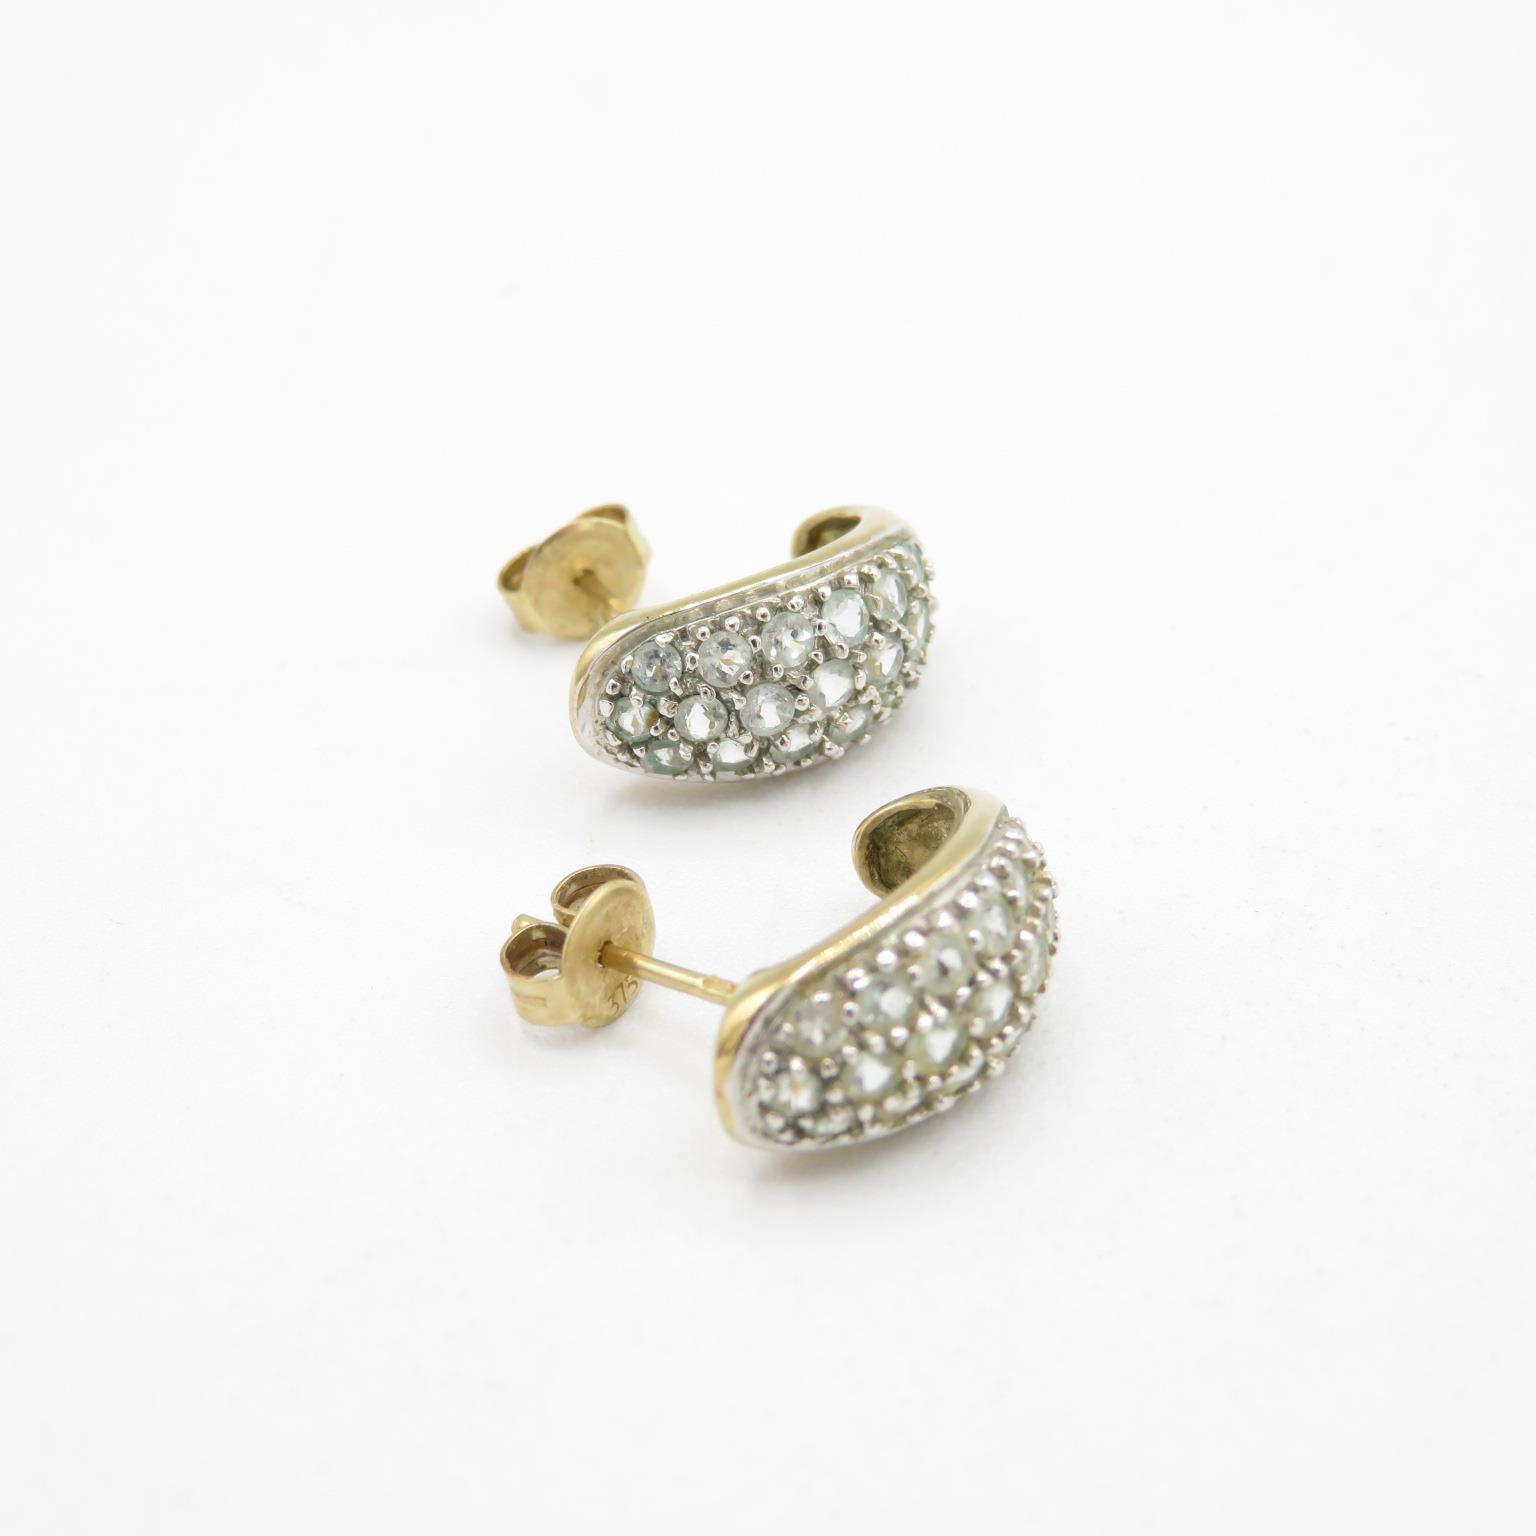 9ct gold blue gemstone c-hoop earrings with scroll backs - 2.6 g - Image 2 of 5